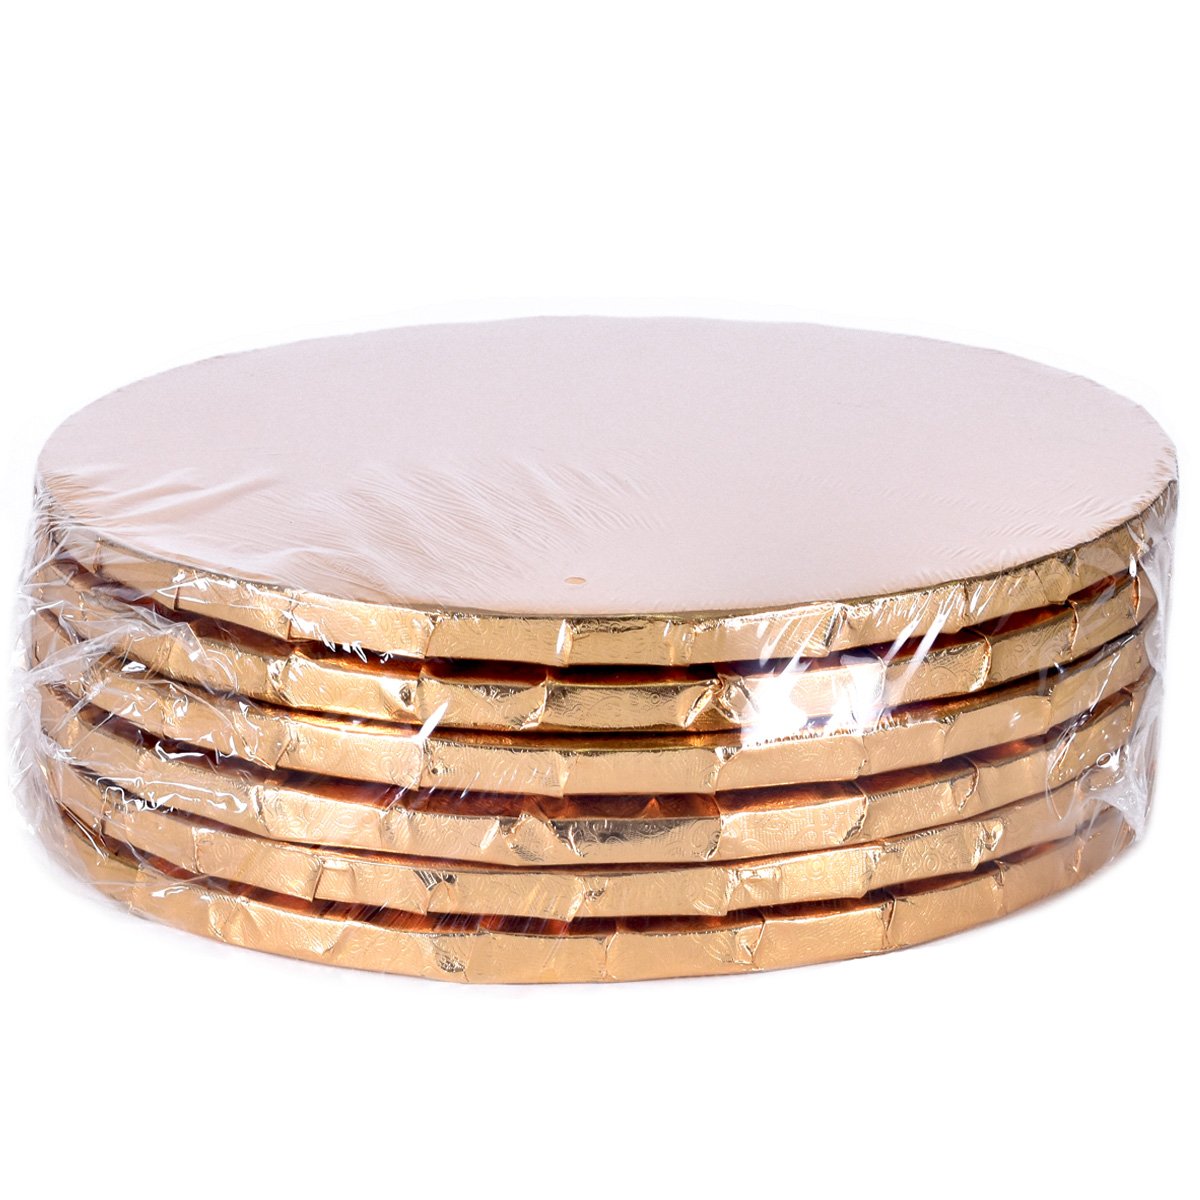 10″ Round Cake Drum – Iced Jems Shop